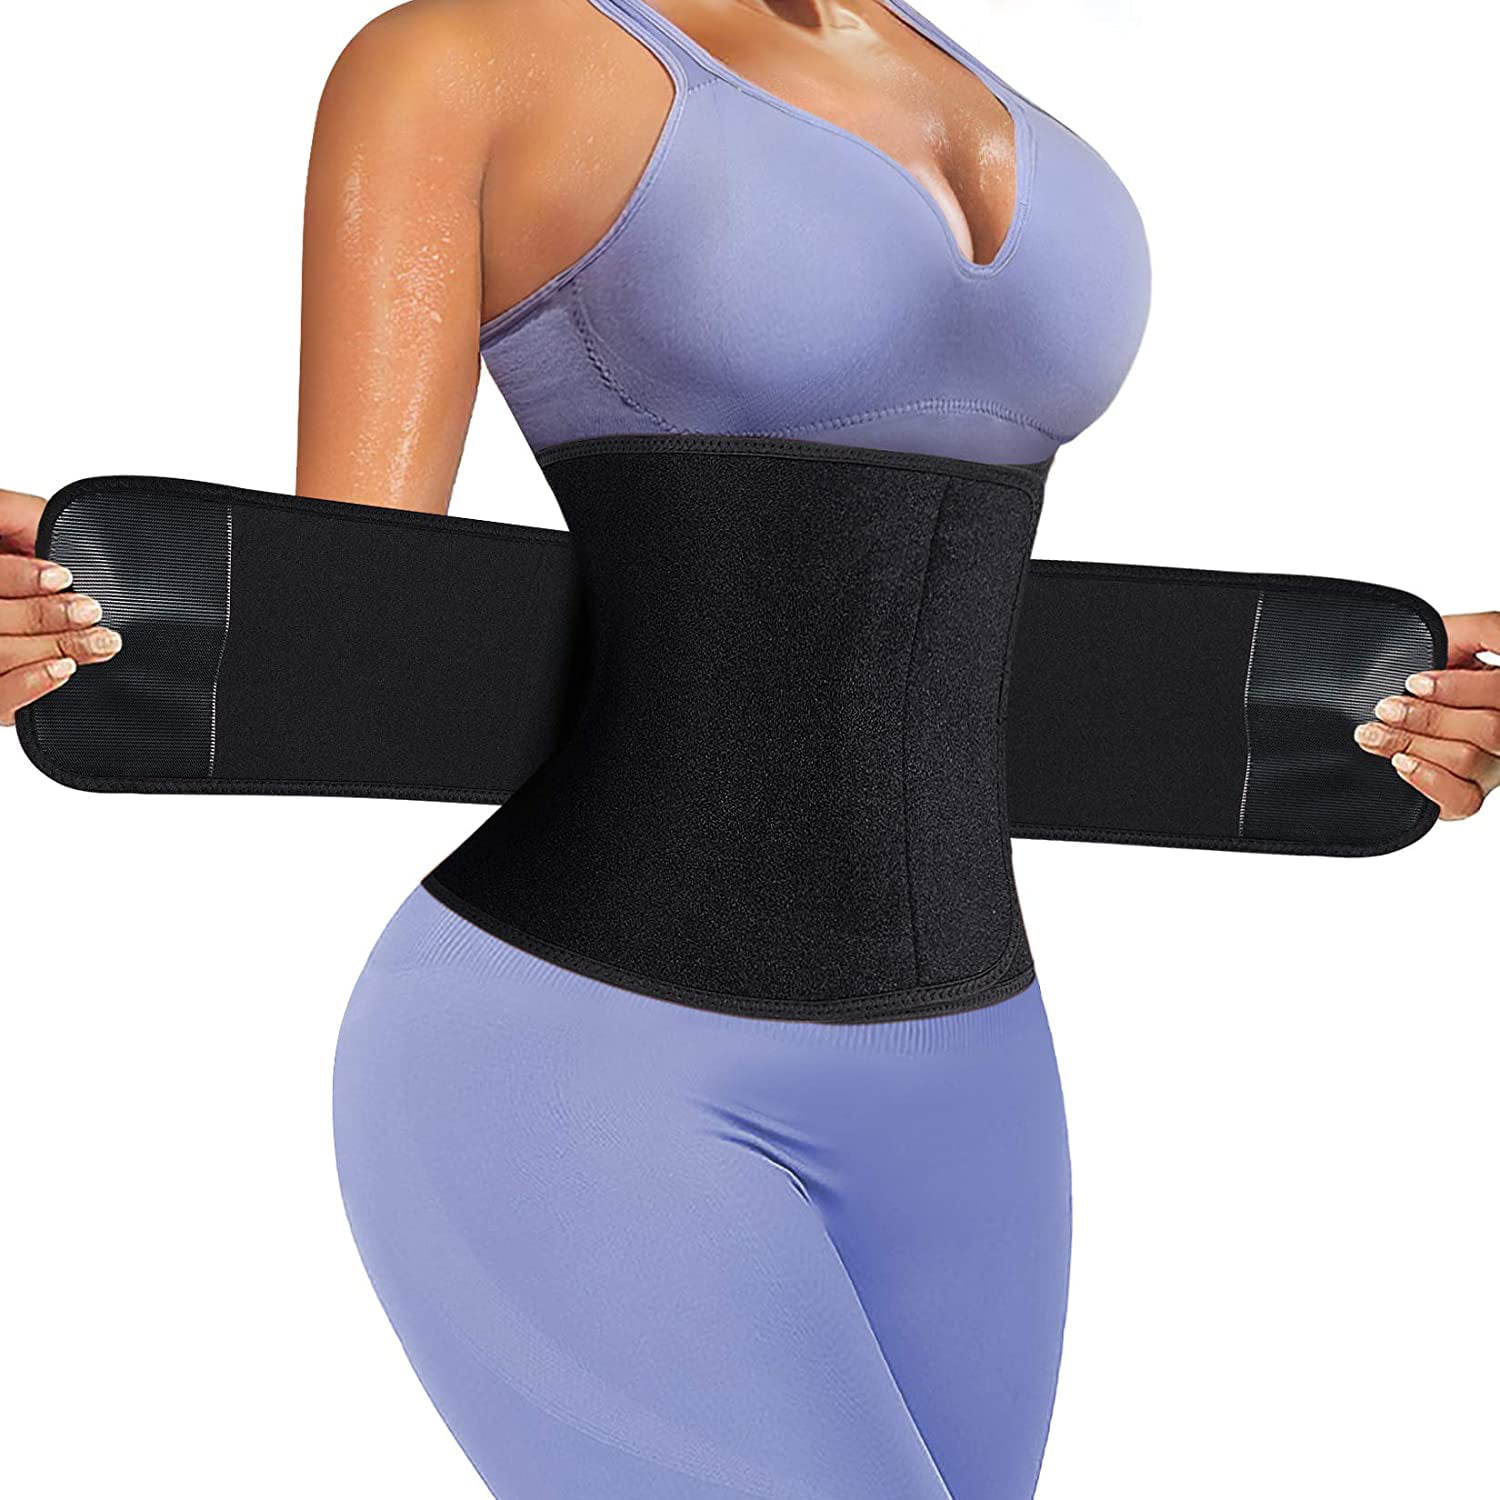 4 in 1 Waist Trimmer Belt Thigh Slim Sweat Belt Weight Loss for Workout Waist Trainer for Women Medium, Black 